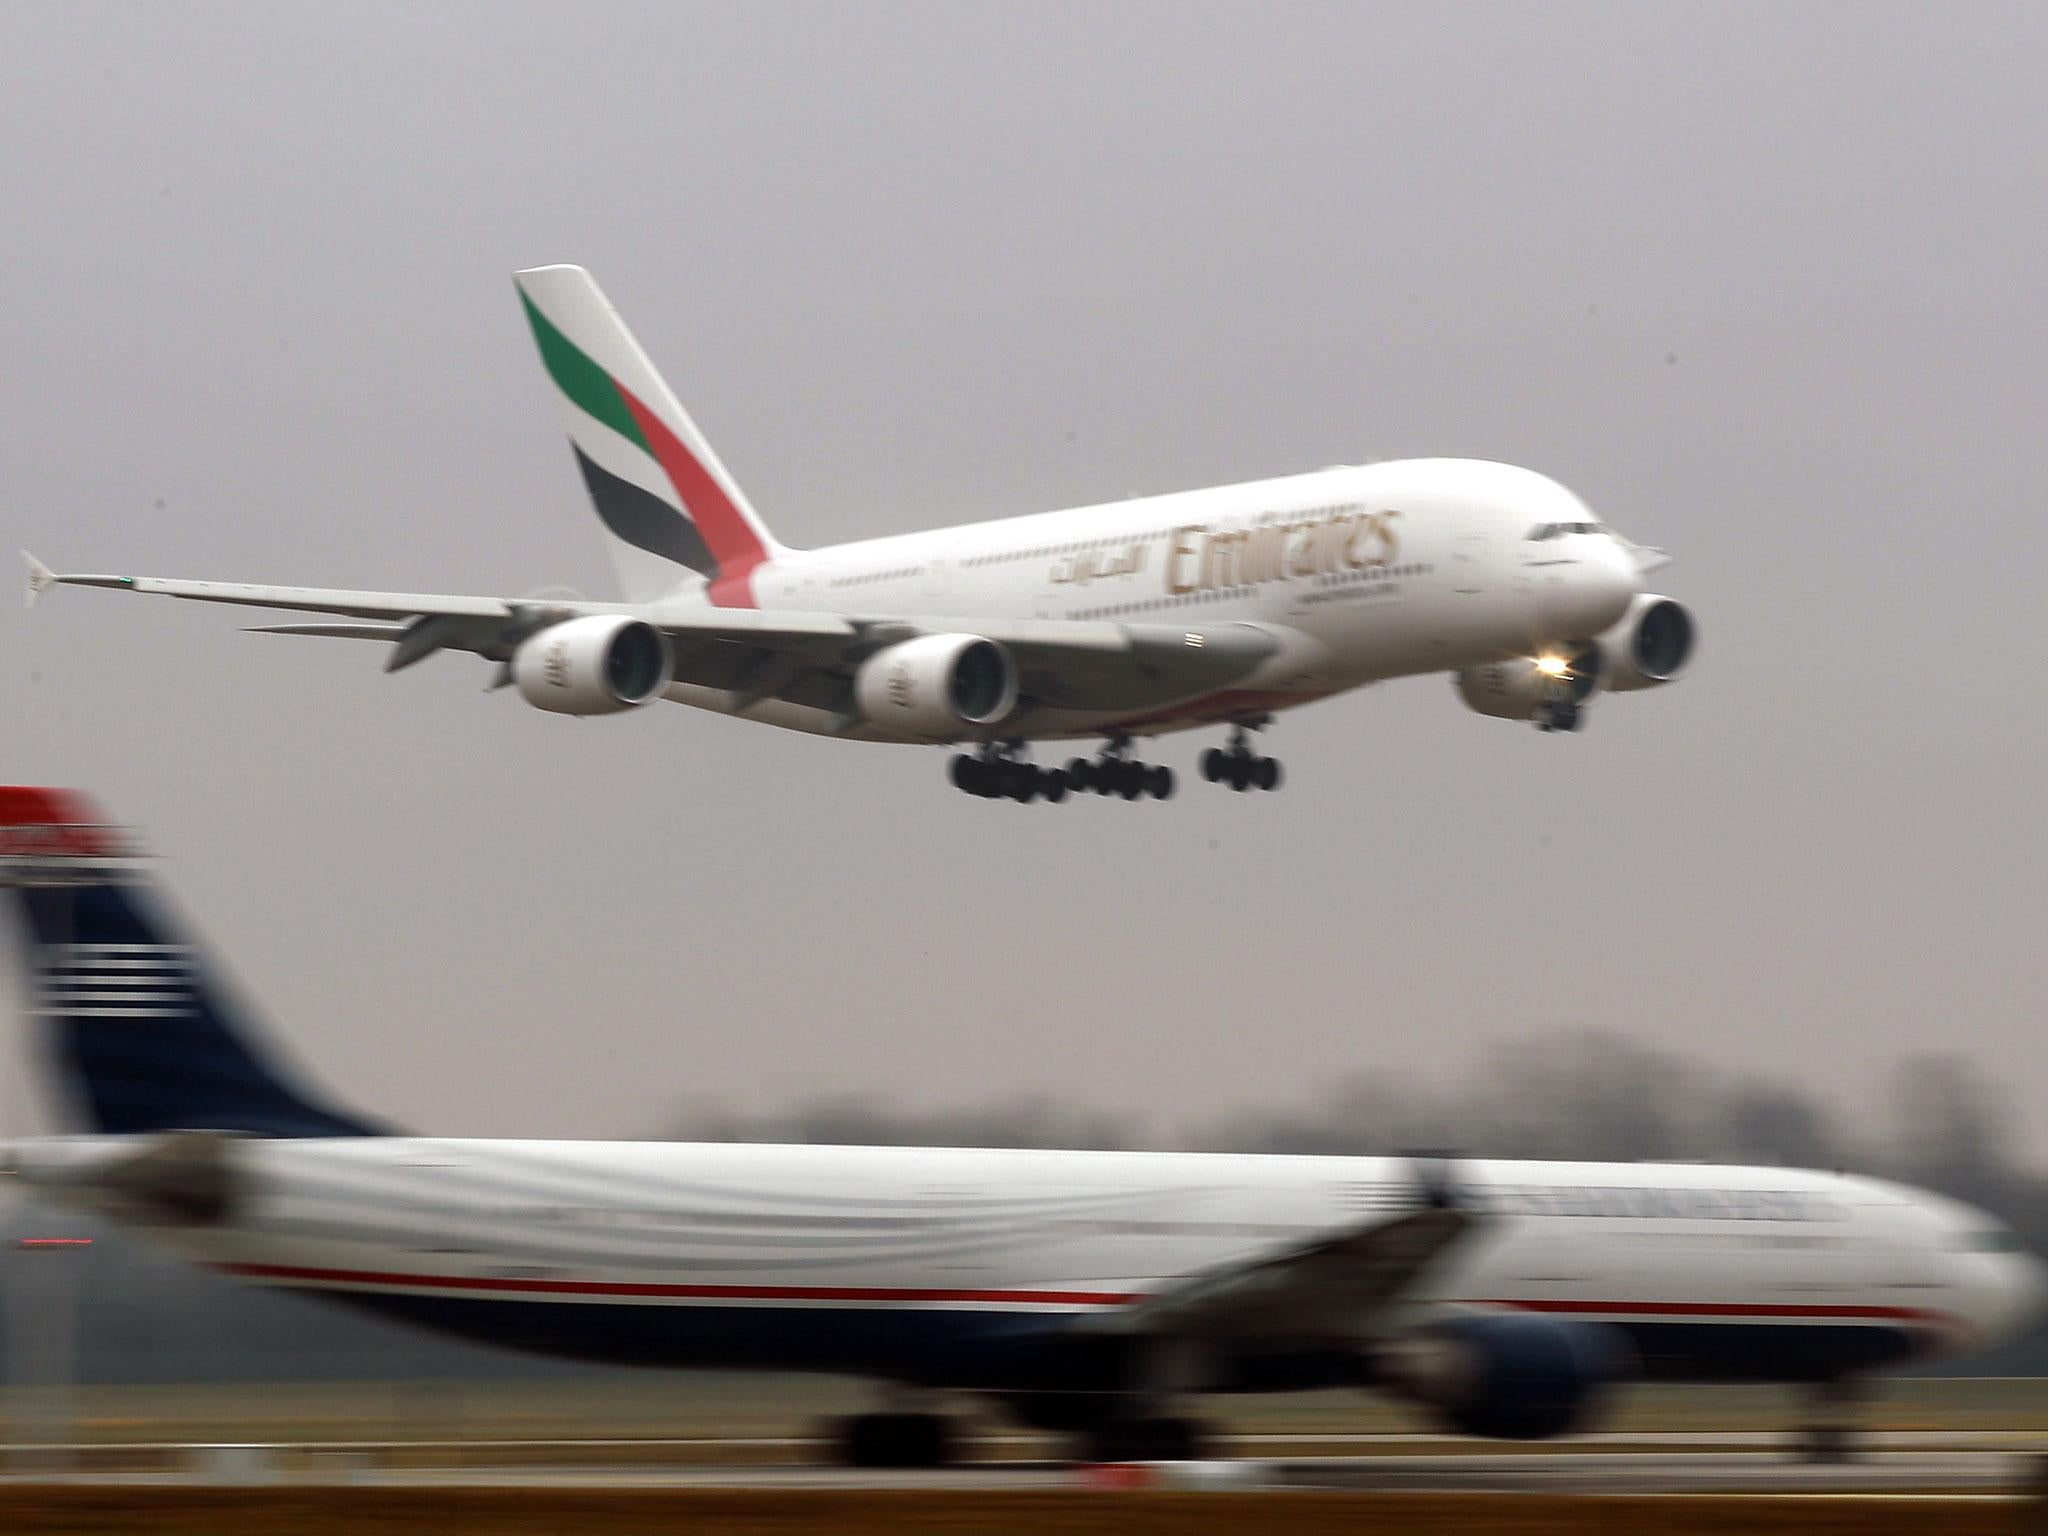 A medical team met Emirates Flight EK 21 when it landed at Manchester Airport around 7.30am